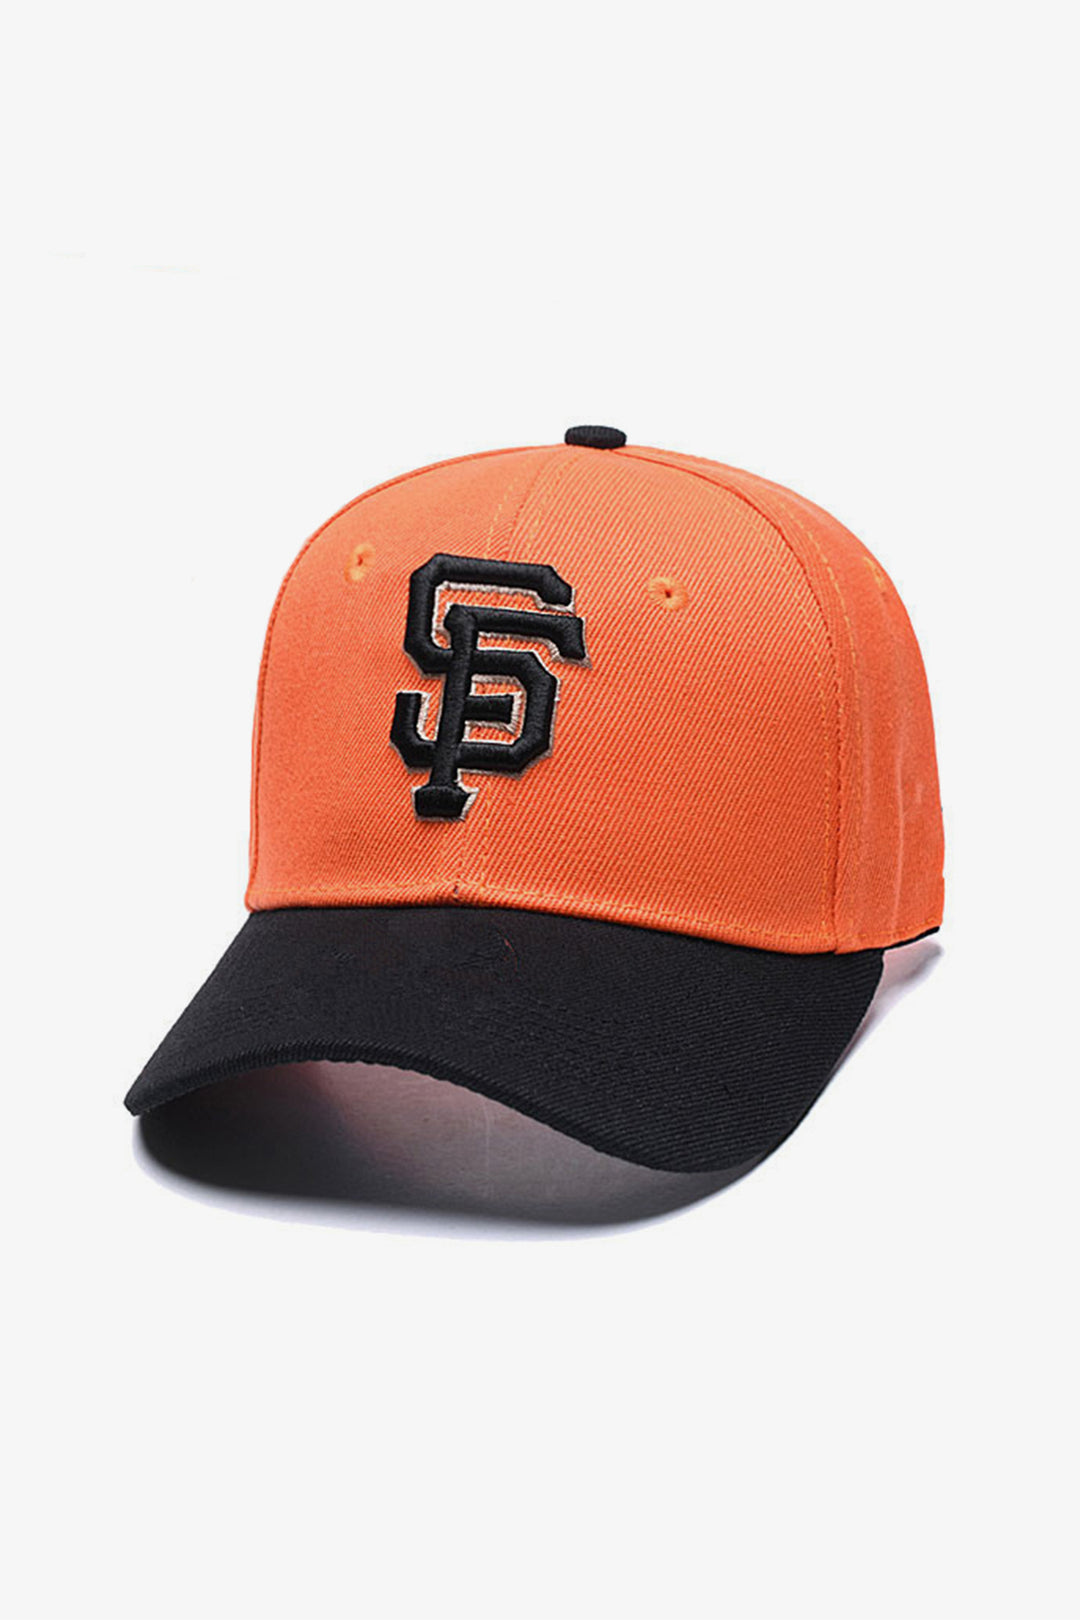 San Francisco Giants Baseball Cap  - S23 - MCP117R